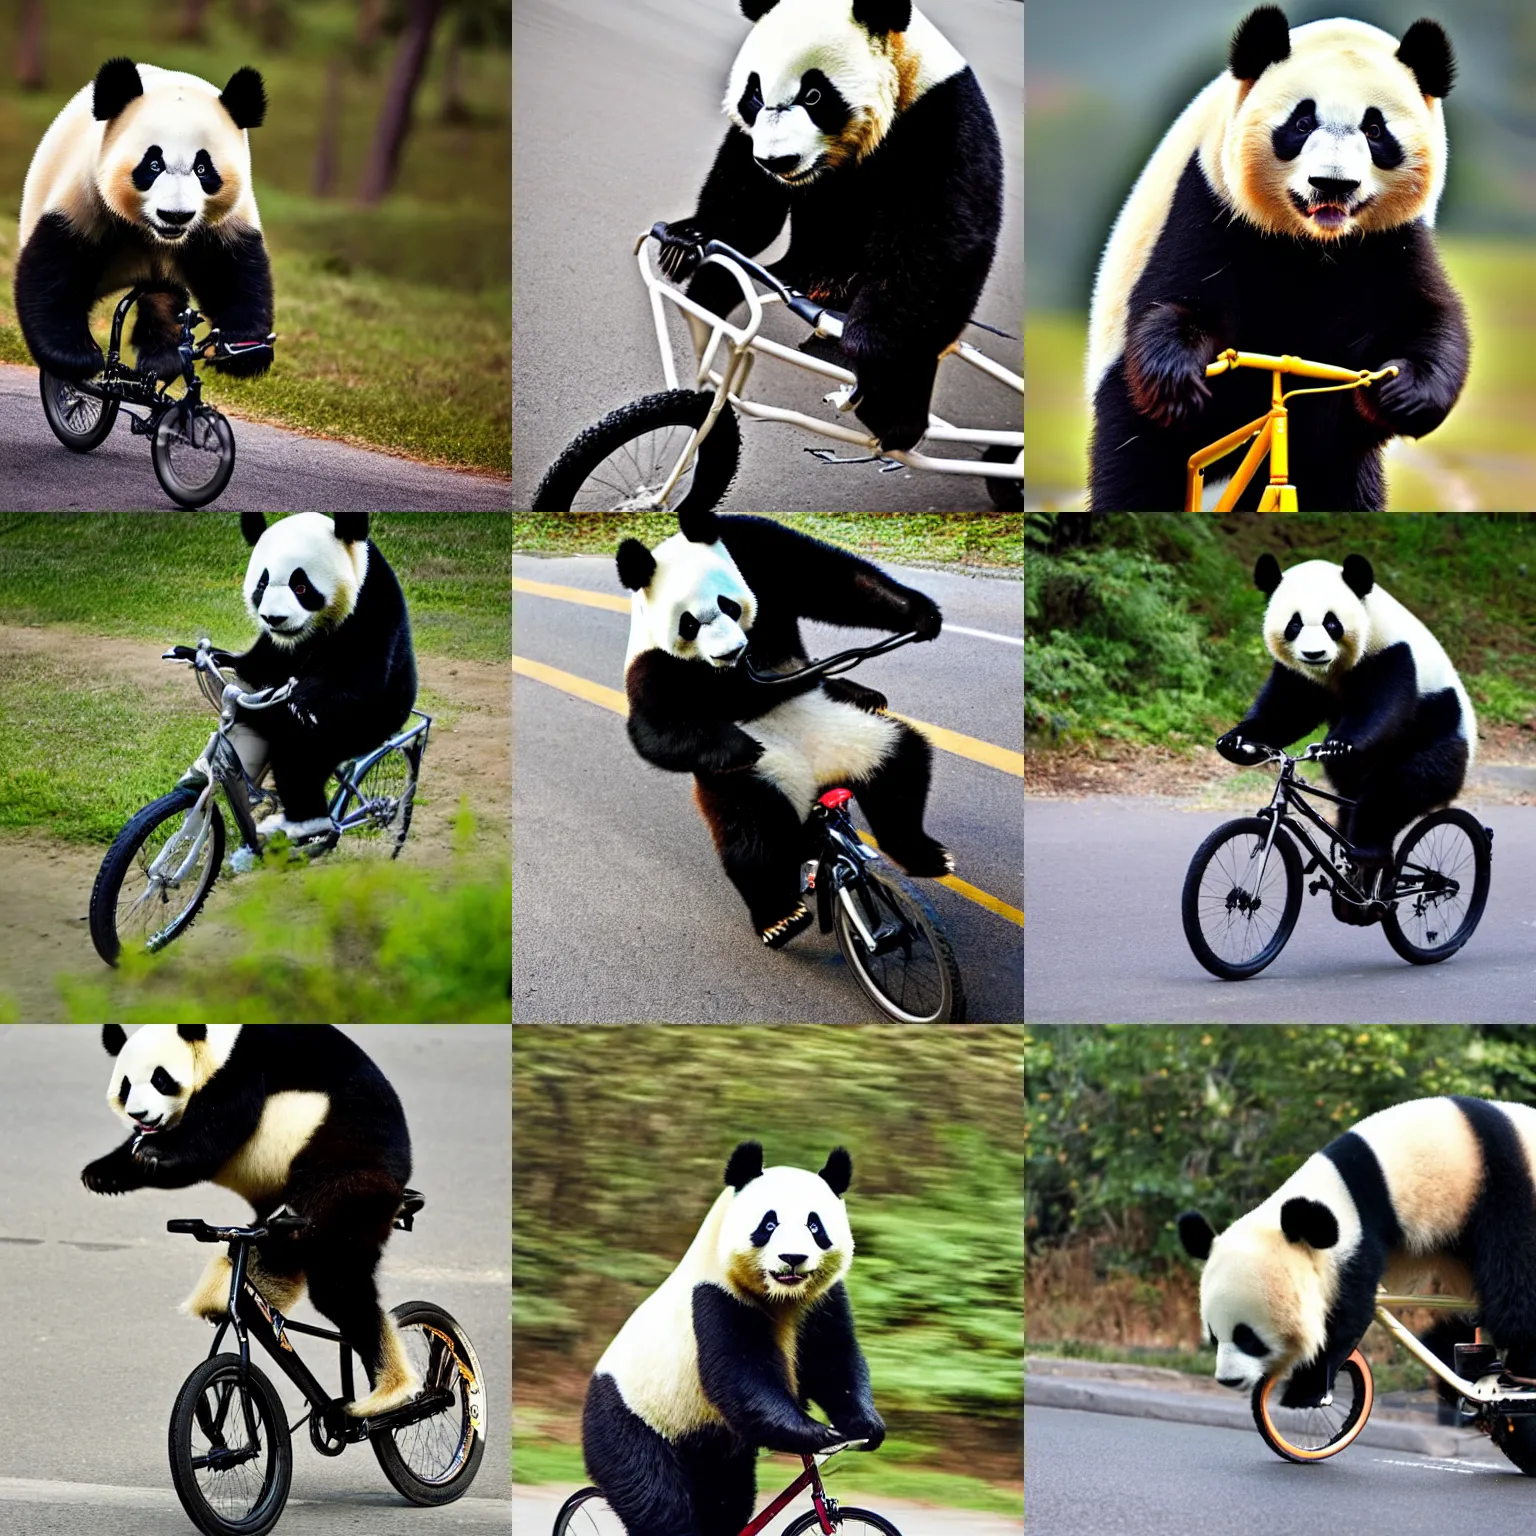 Prompt: a photo of a panda riding a bike, professional photography, award winning, high quality